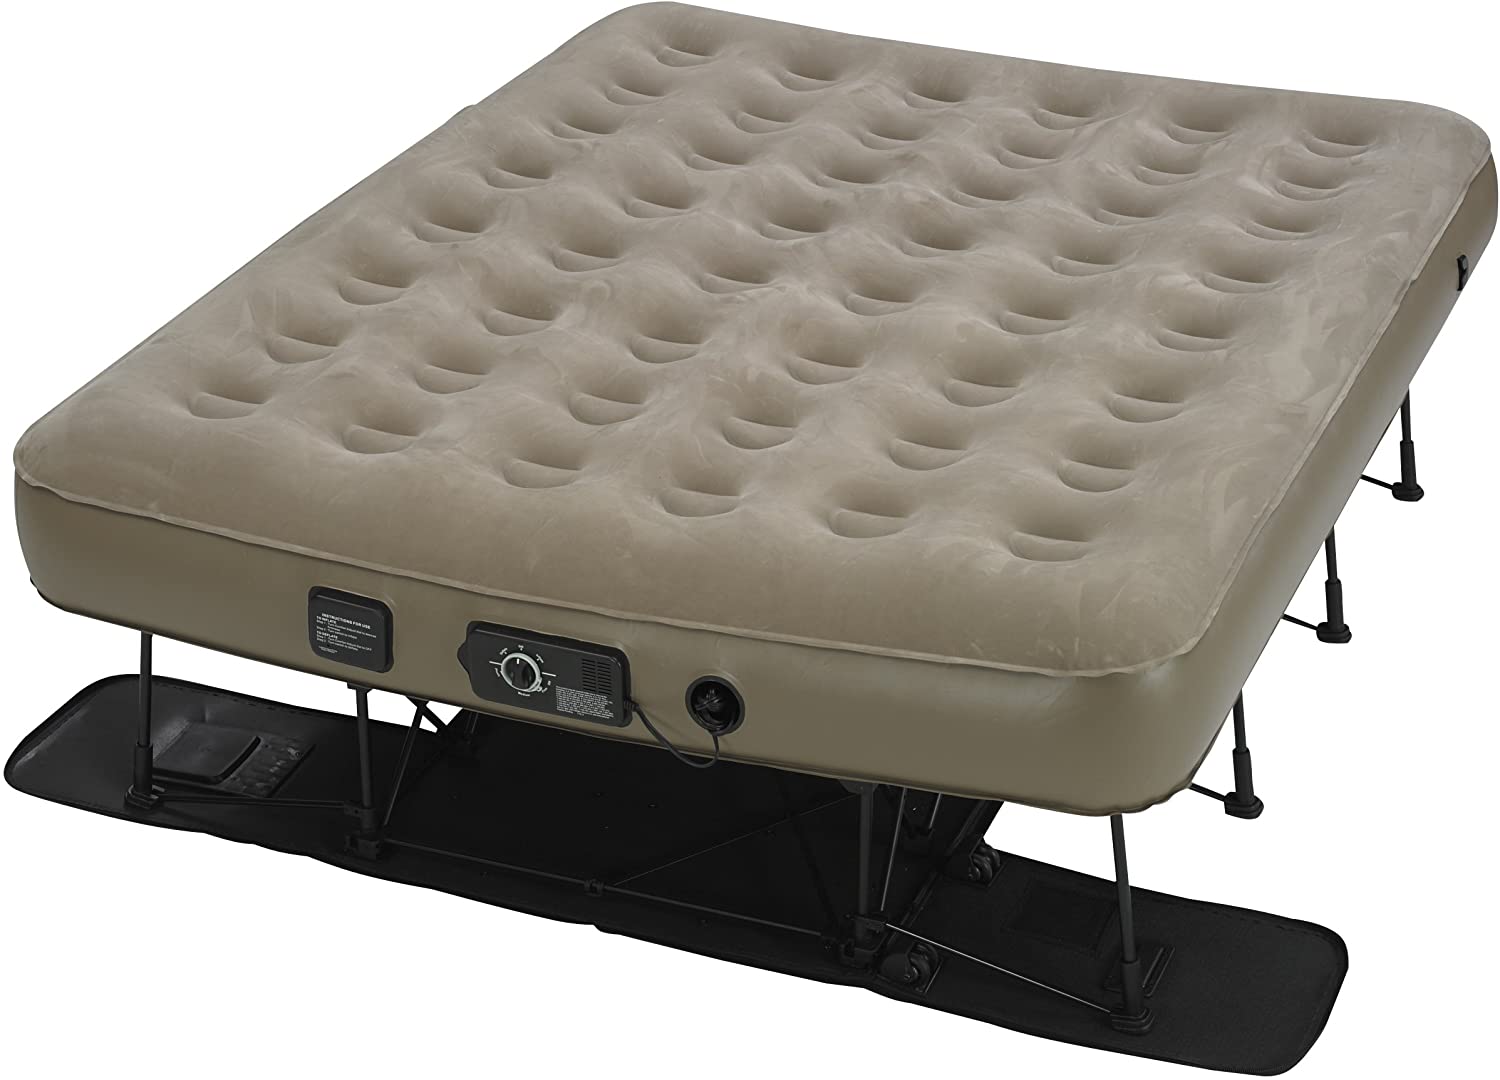 queen mattress for camping cot